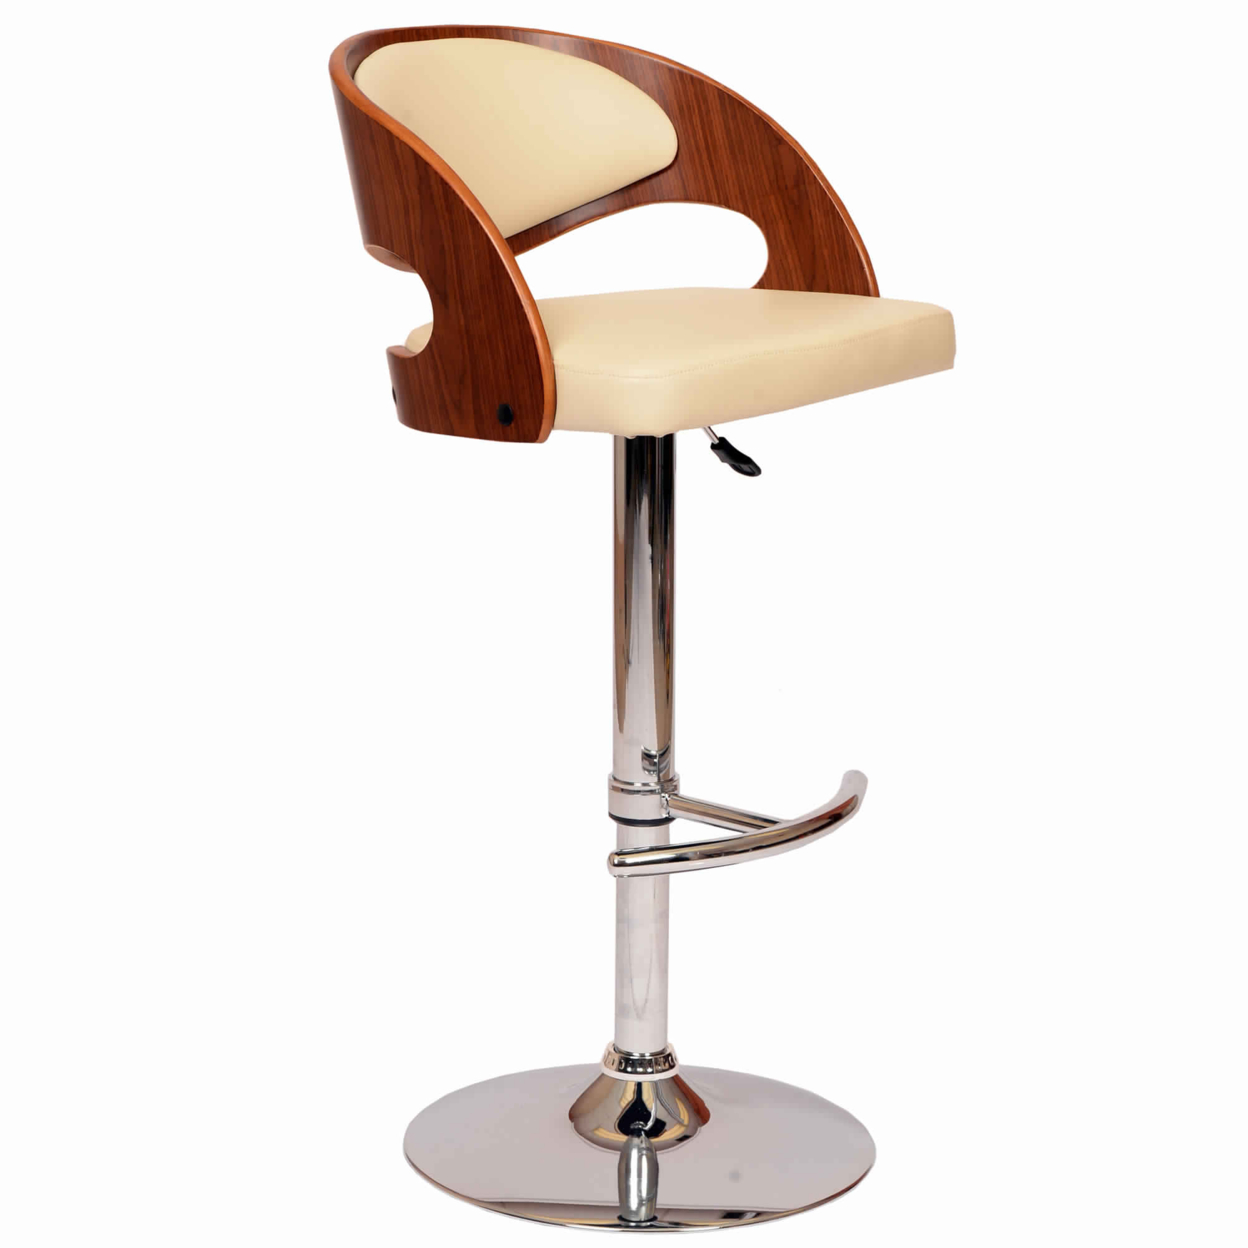 Wooden Open Back Barstool With Adjustable Pedestal Base, Cream And Brown- Saltoro Sherpi